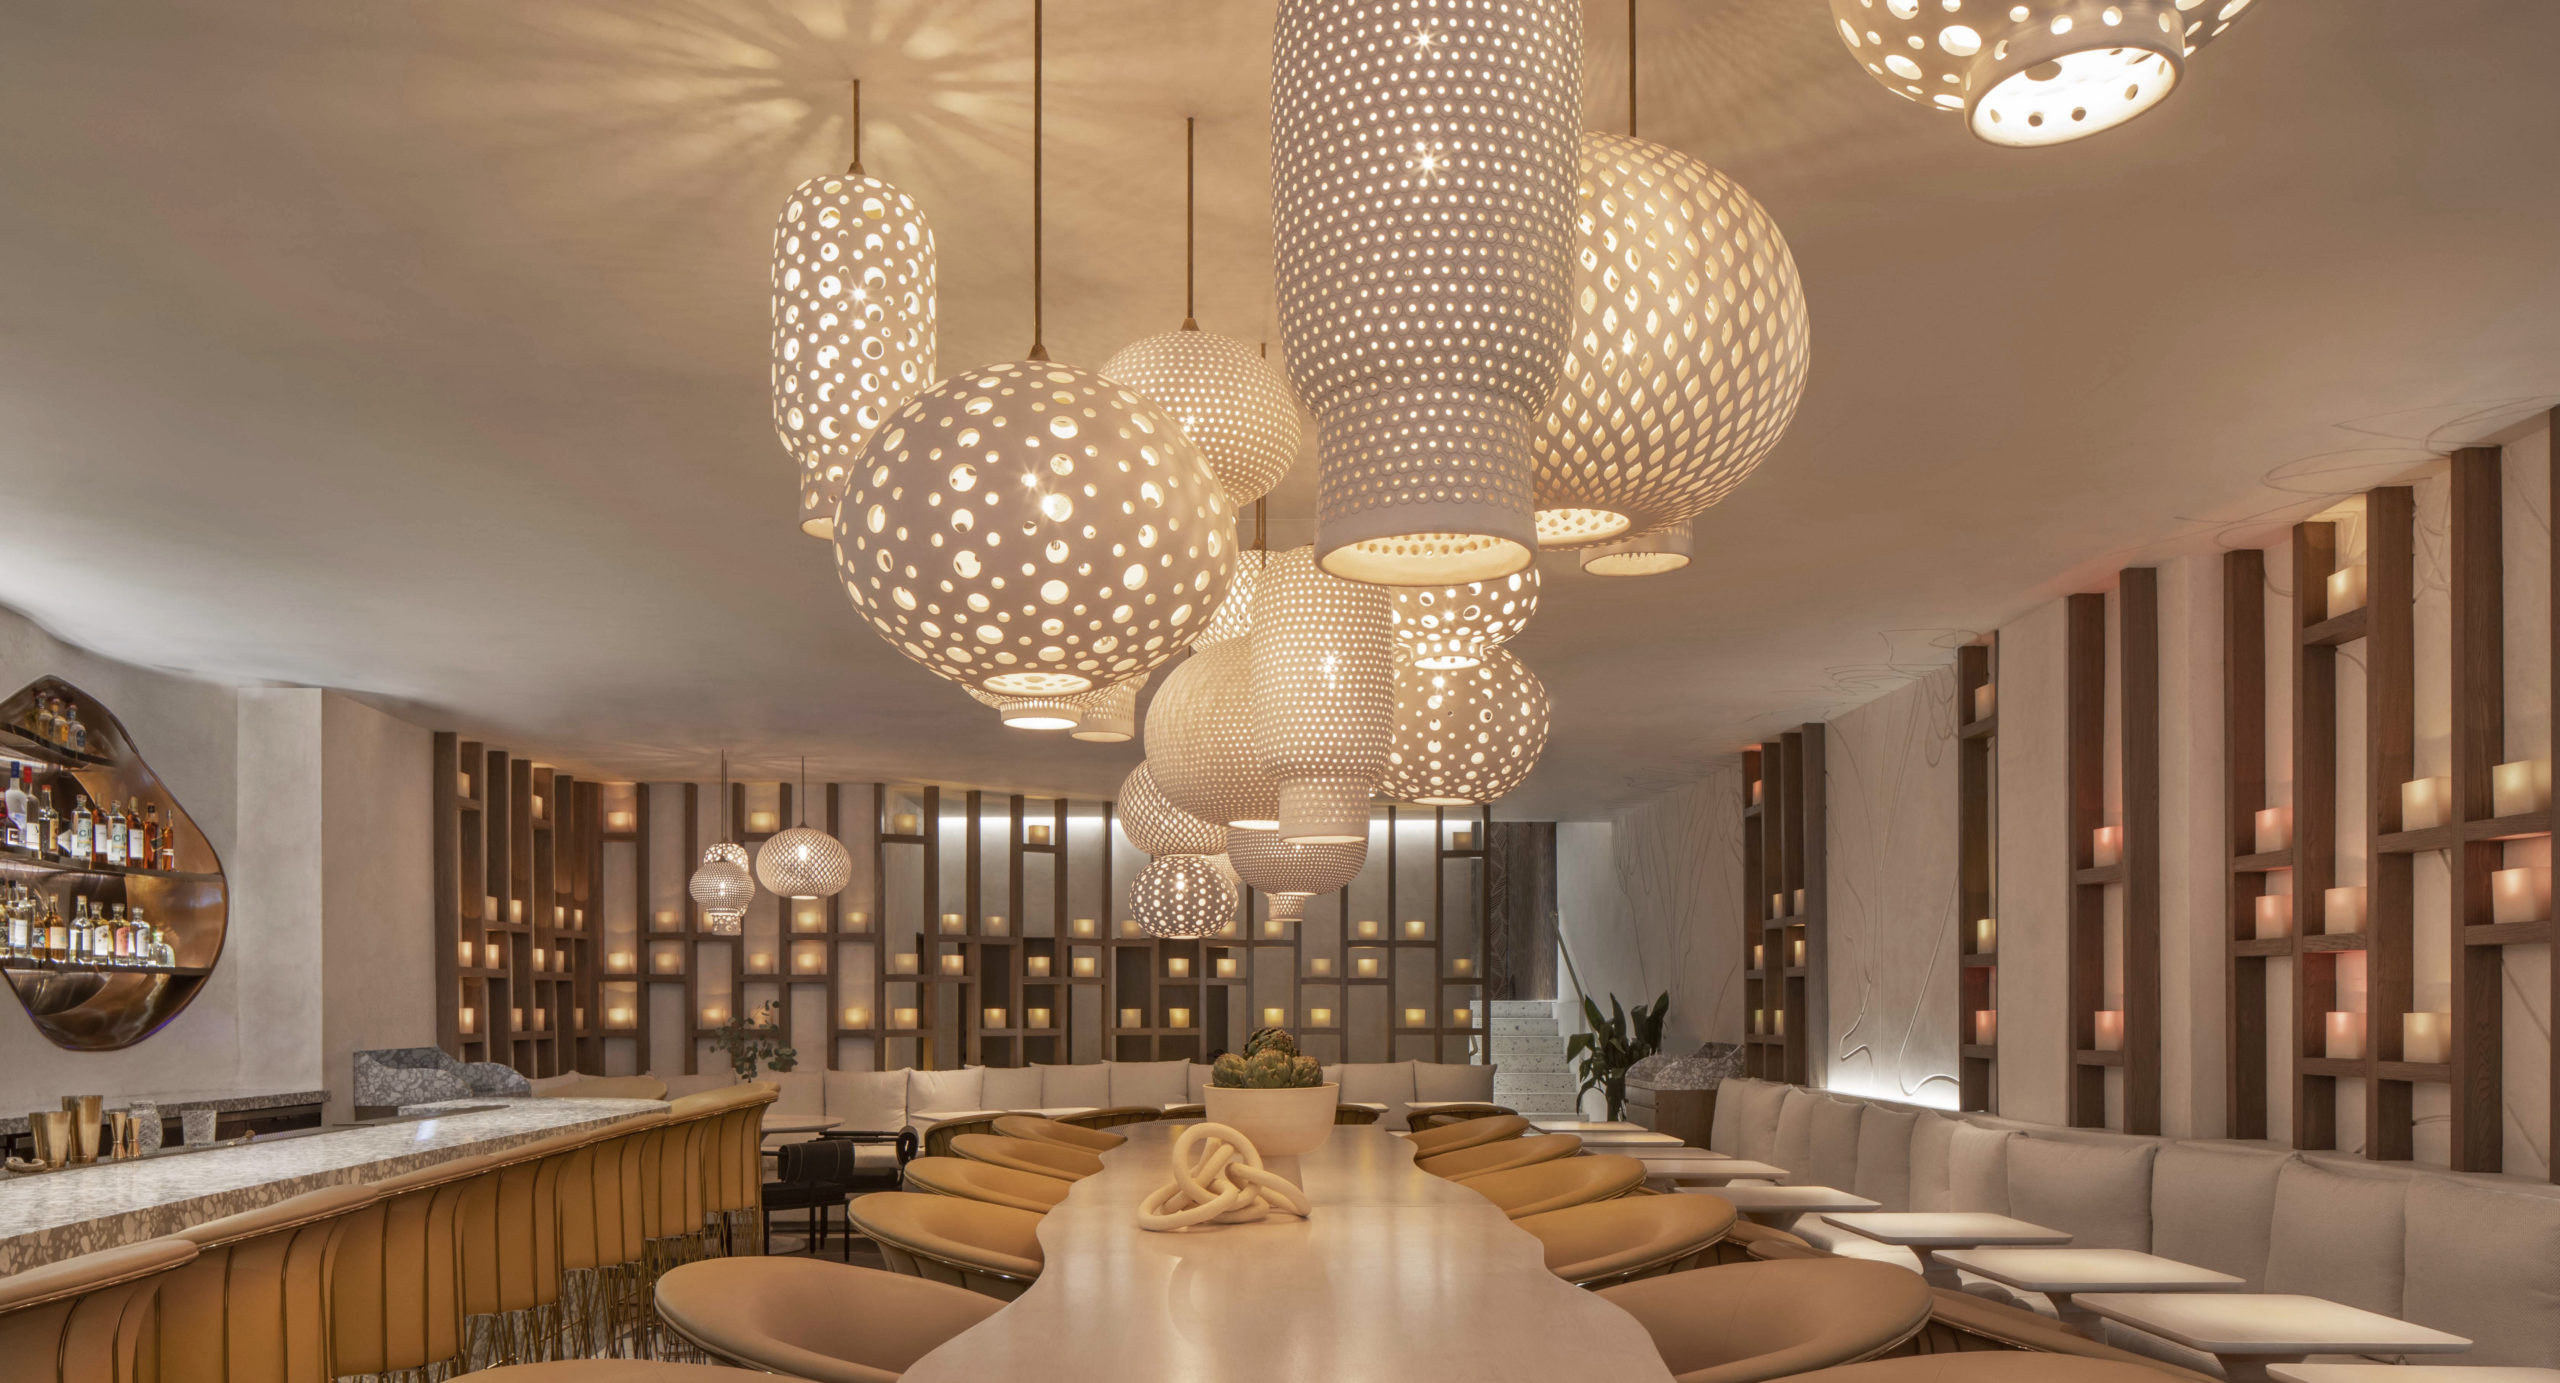 Pendant lights by L'Aviva Home for Gulla Jonsdottir Design at Esperanza Restaurant